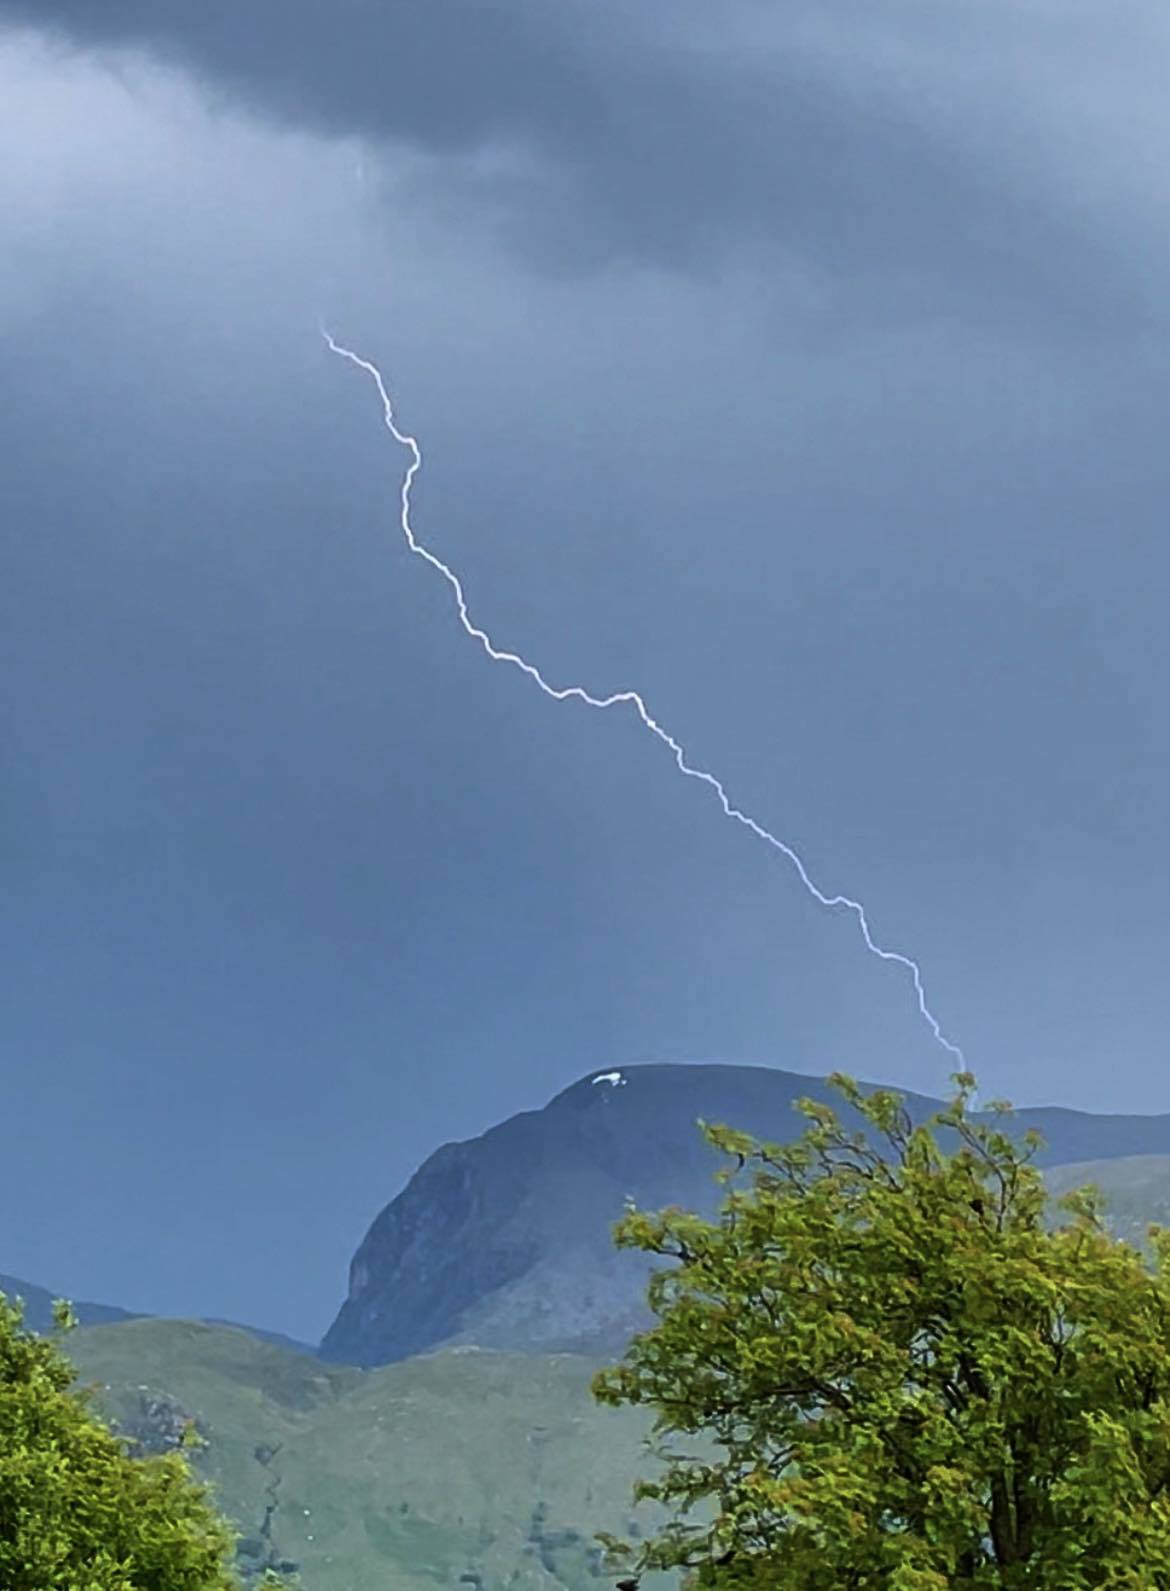 Lightning striking the top of Ben Nevis has been captured on camera.